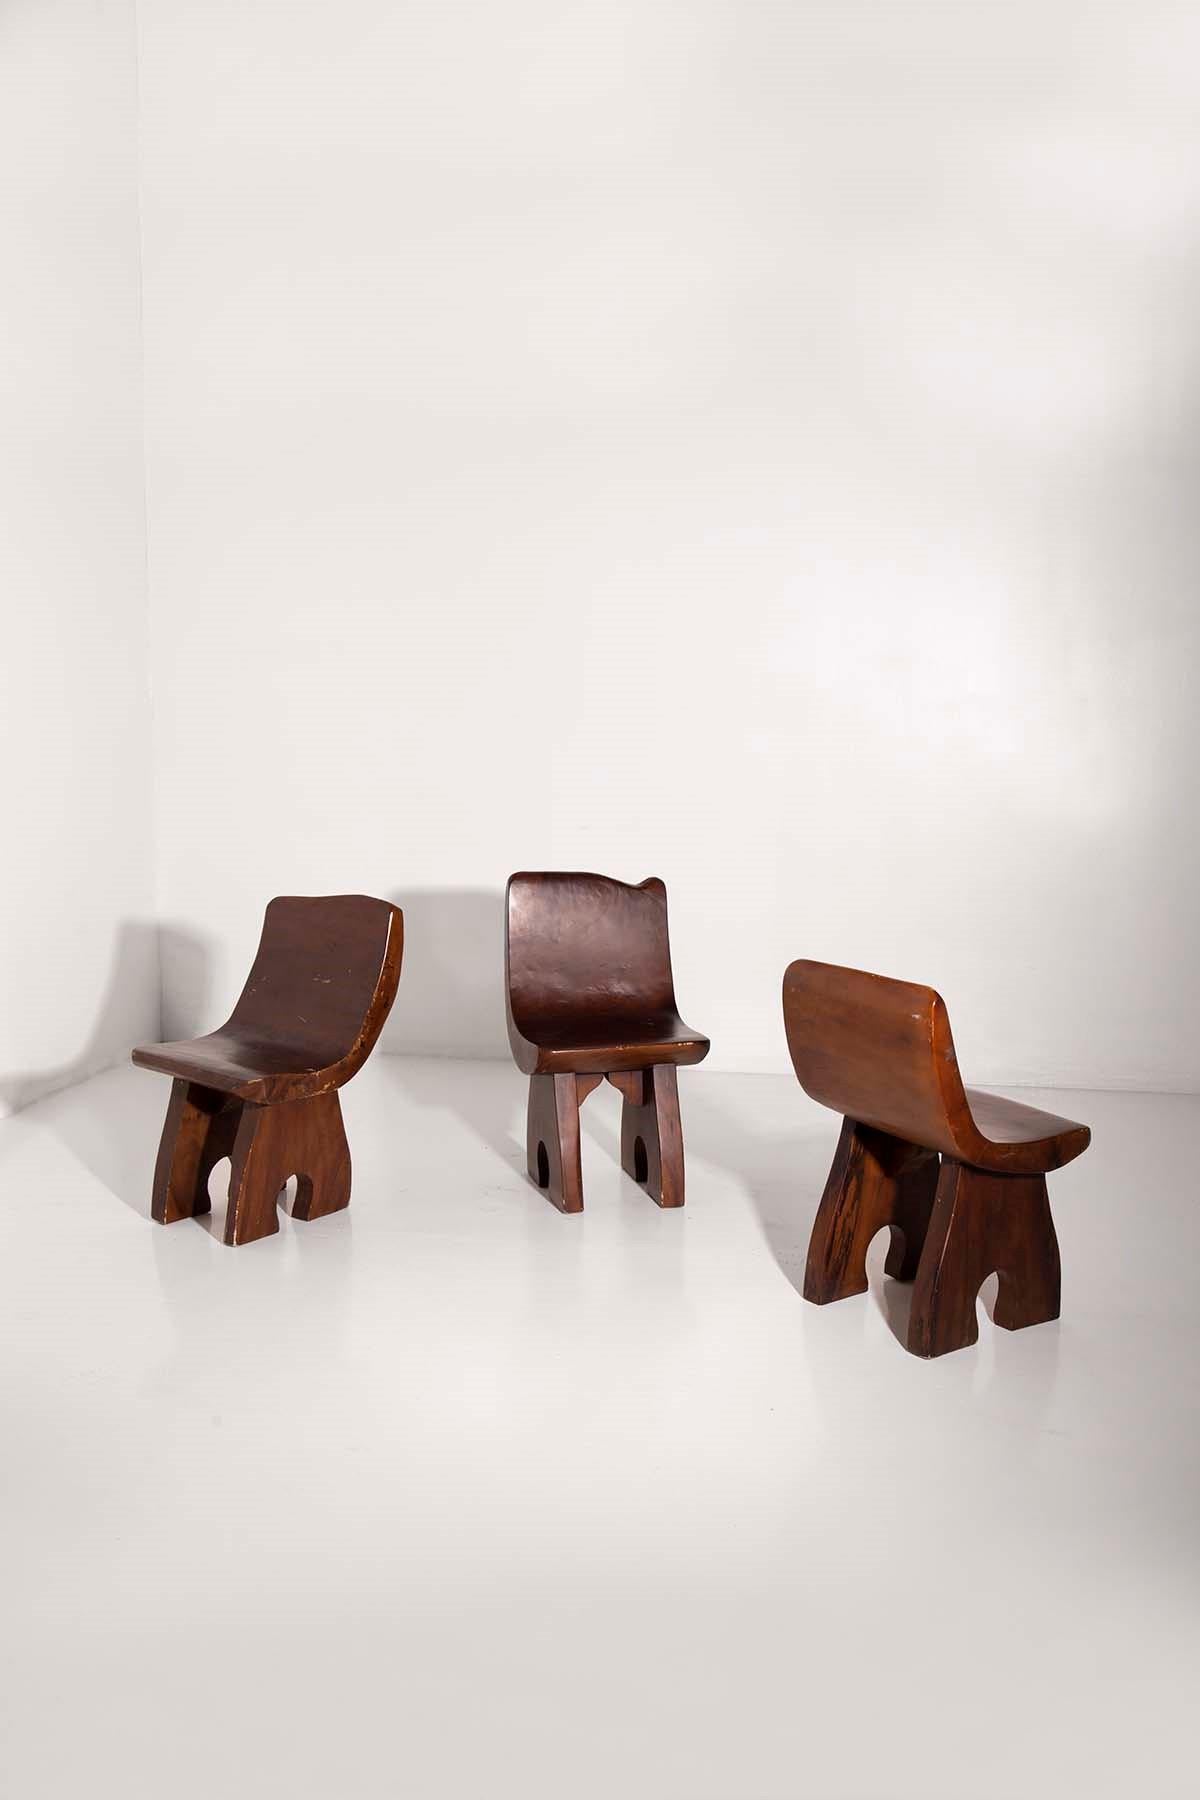 Three Brazilian wooden chairs attributed to Jose Zanine Caldas. C1950s